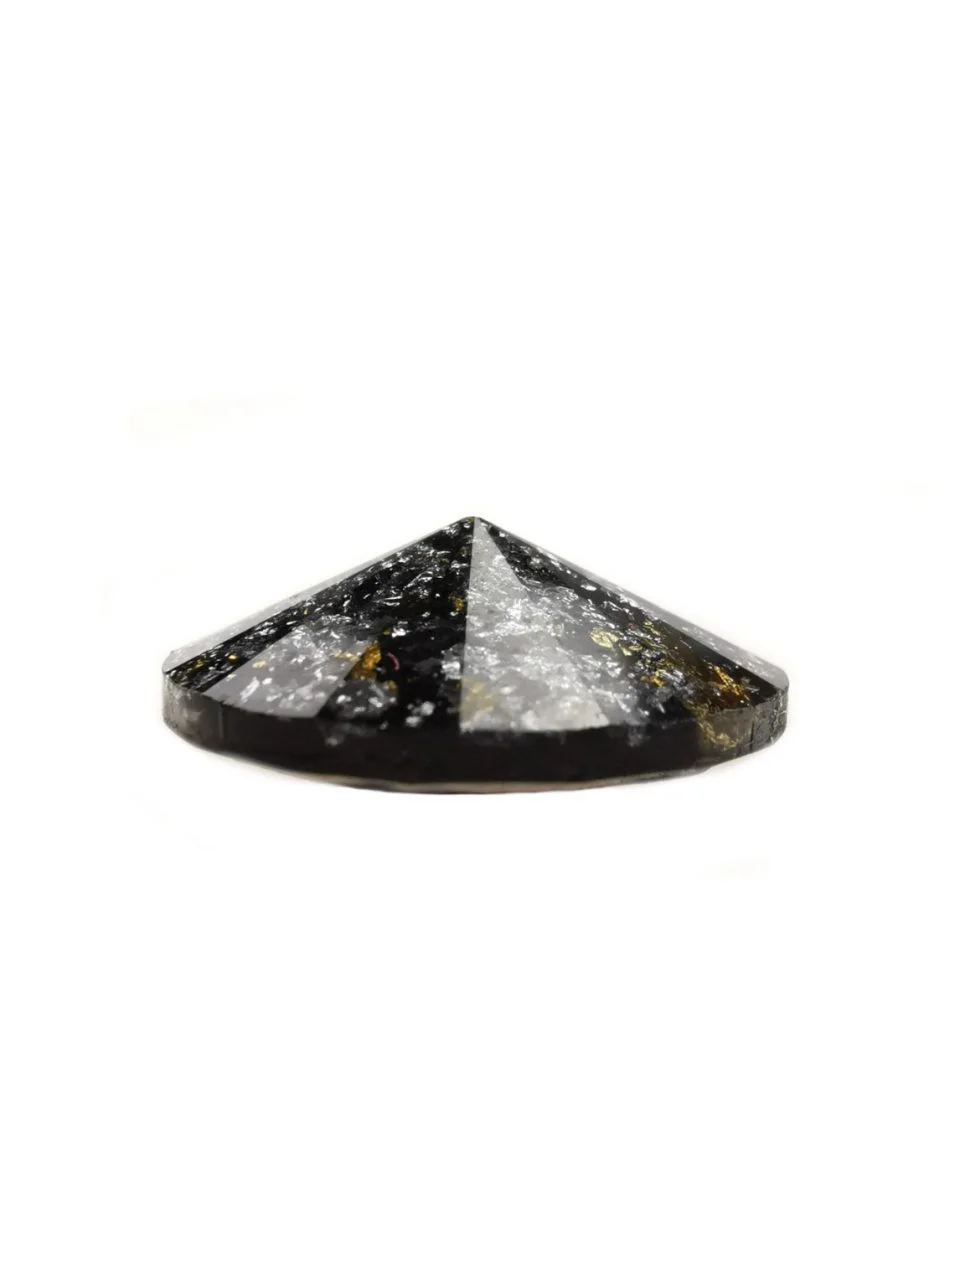 Black Diamond Round Orgone EMF Protection Shield by OrgoneVibes